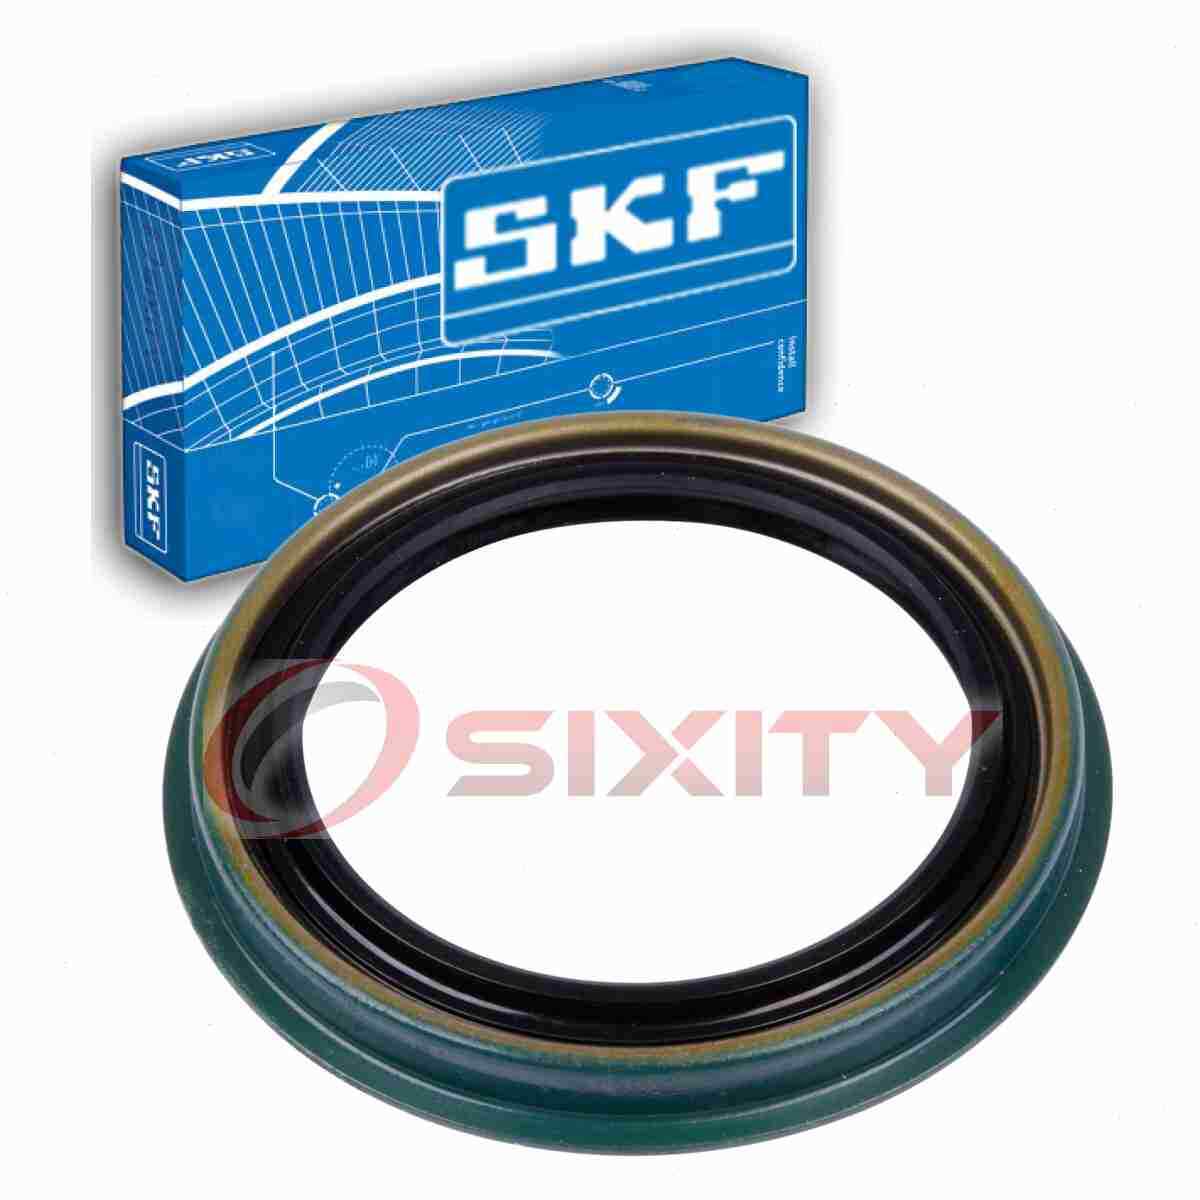 SKF Front Wheel Seal for 1975-1987 Oldsmobile Cutlass Salon Driveline Axles lx